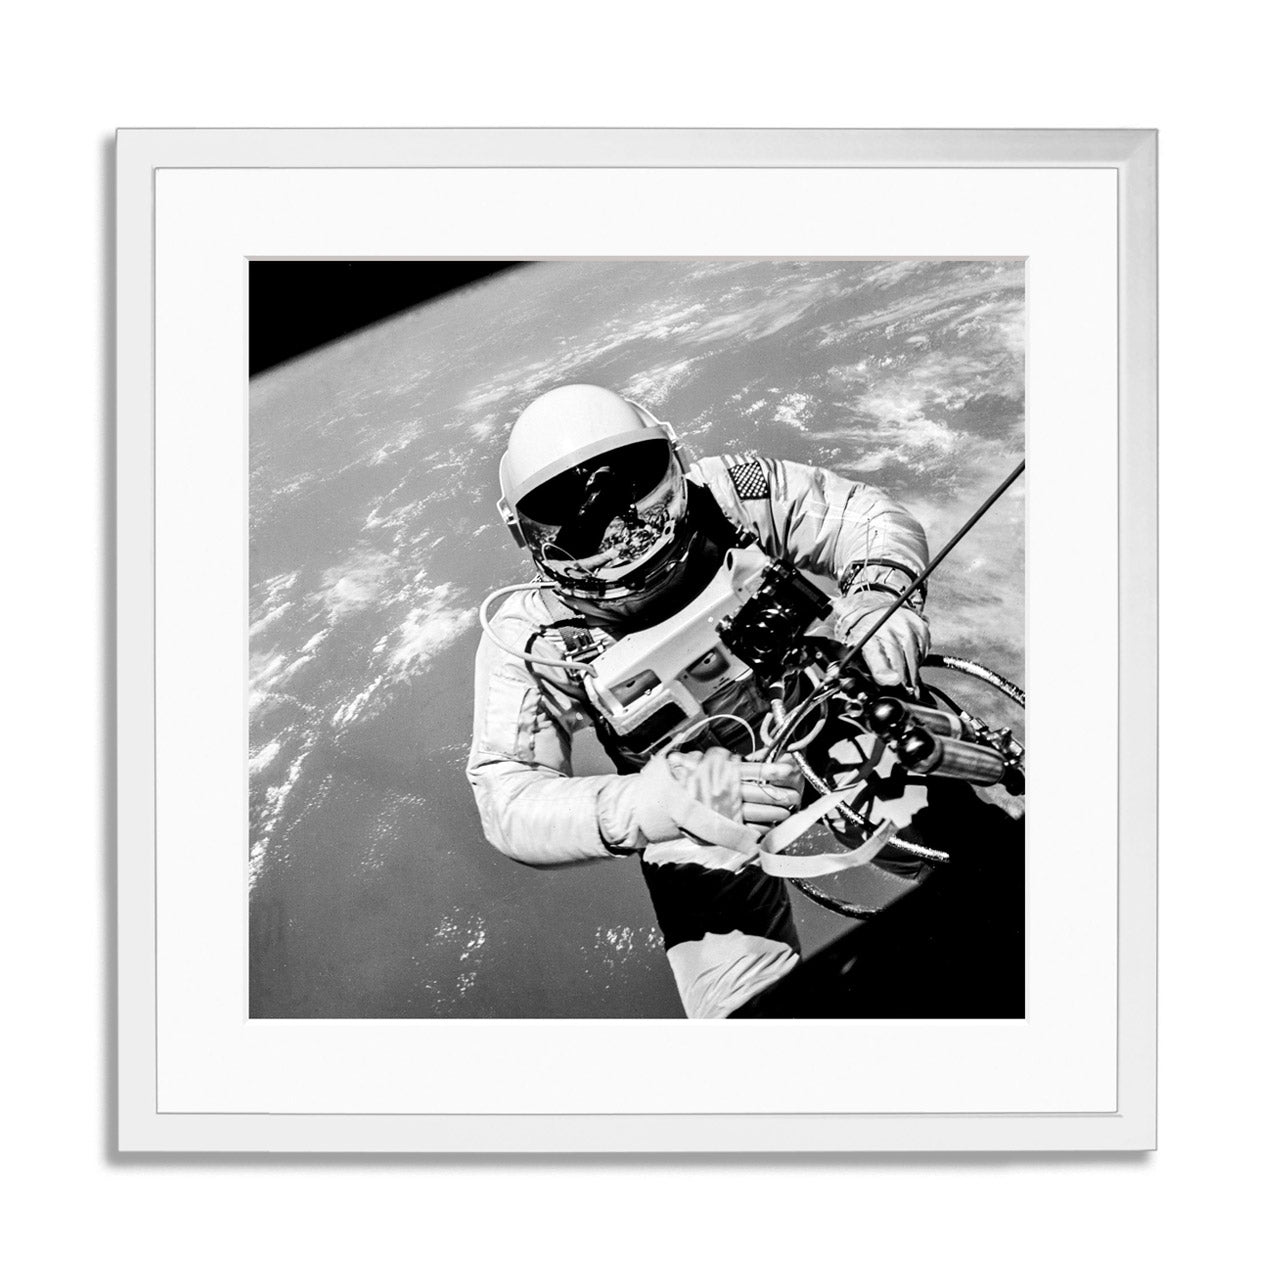 Gemini IV Spacewalk Framed Print